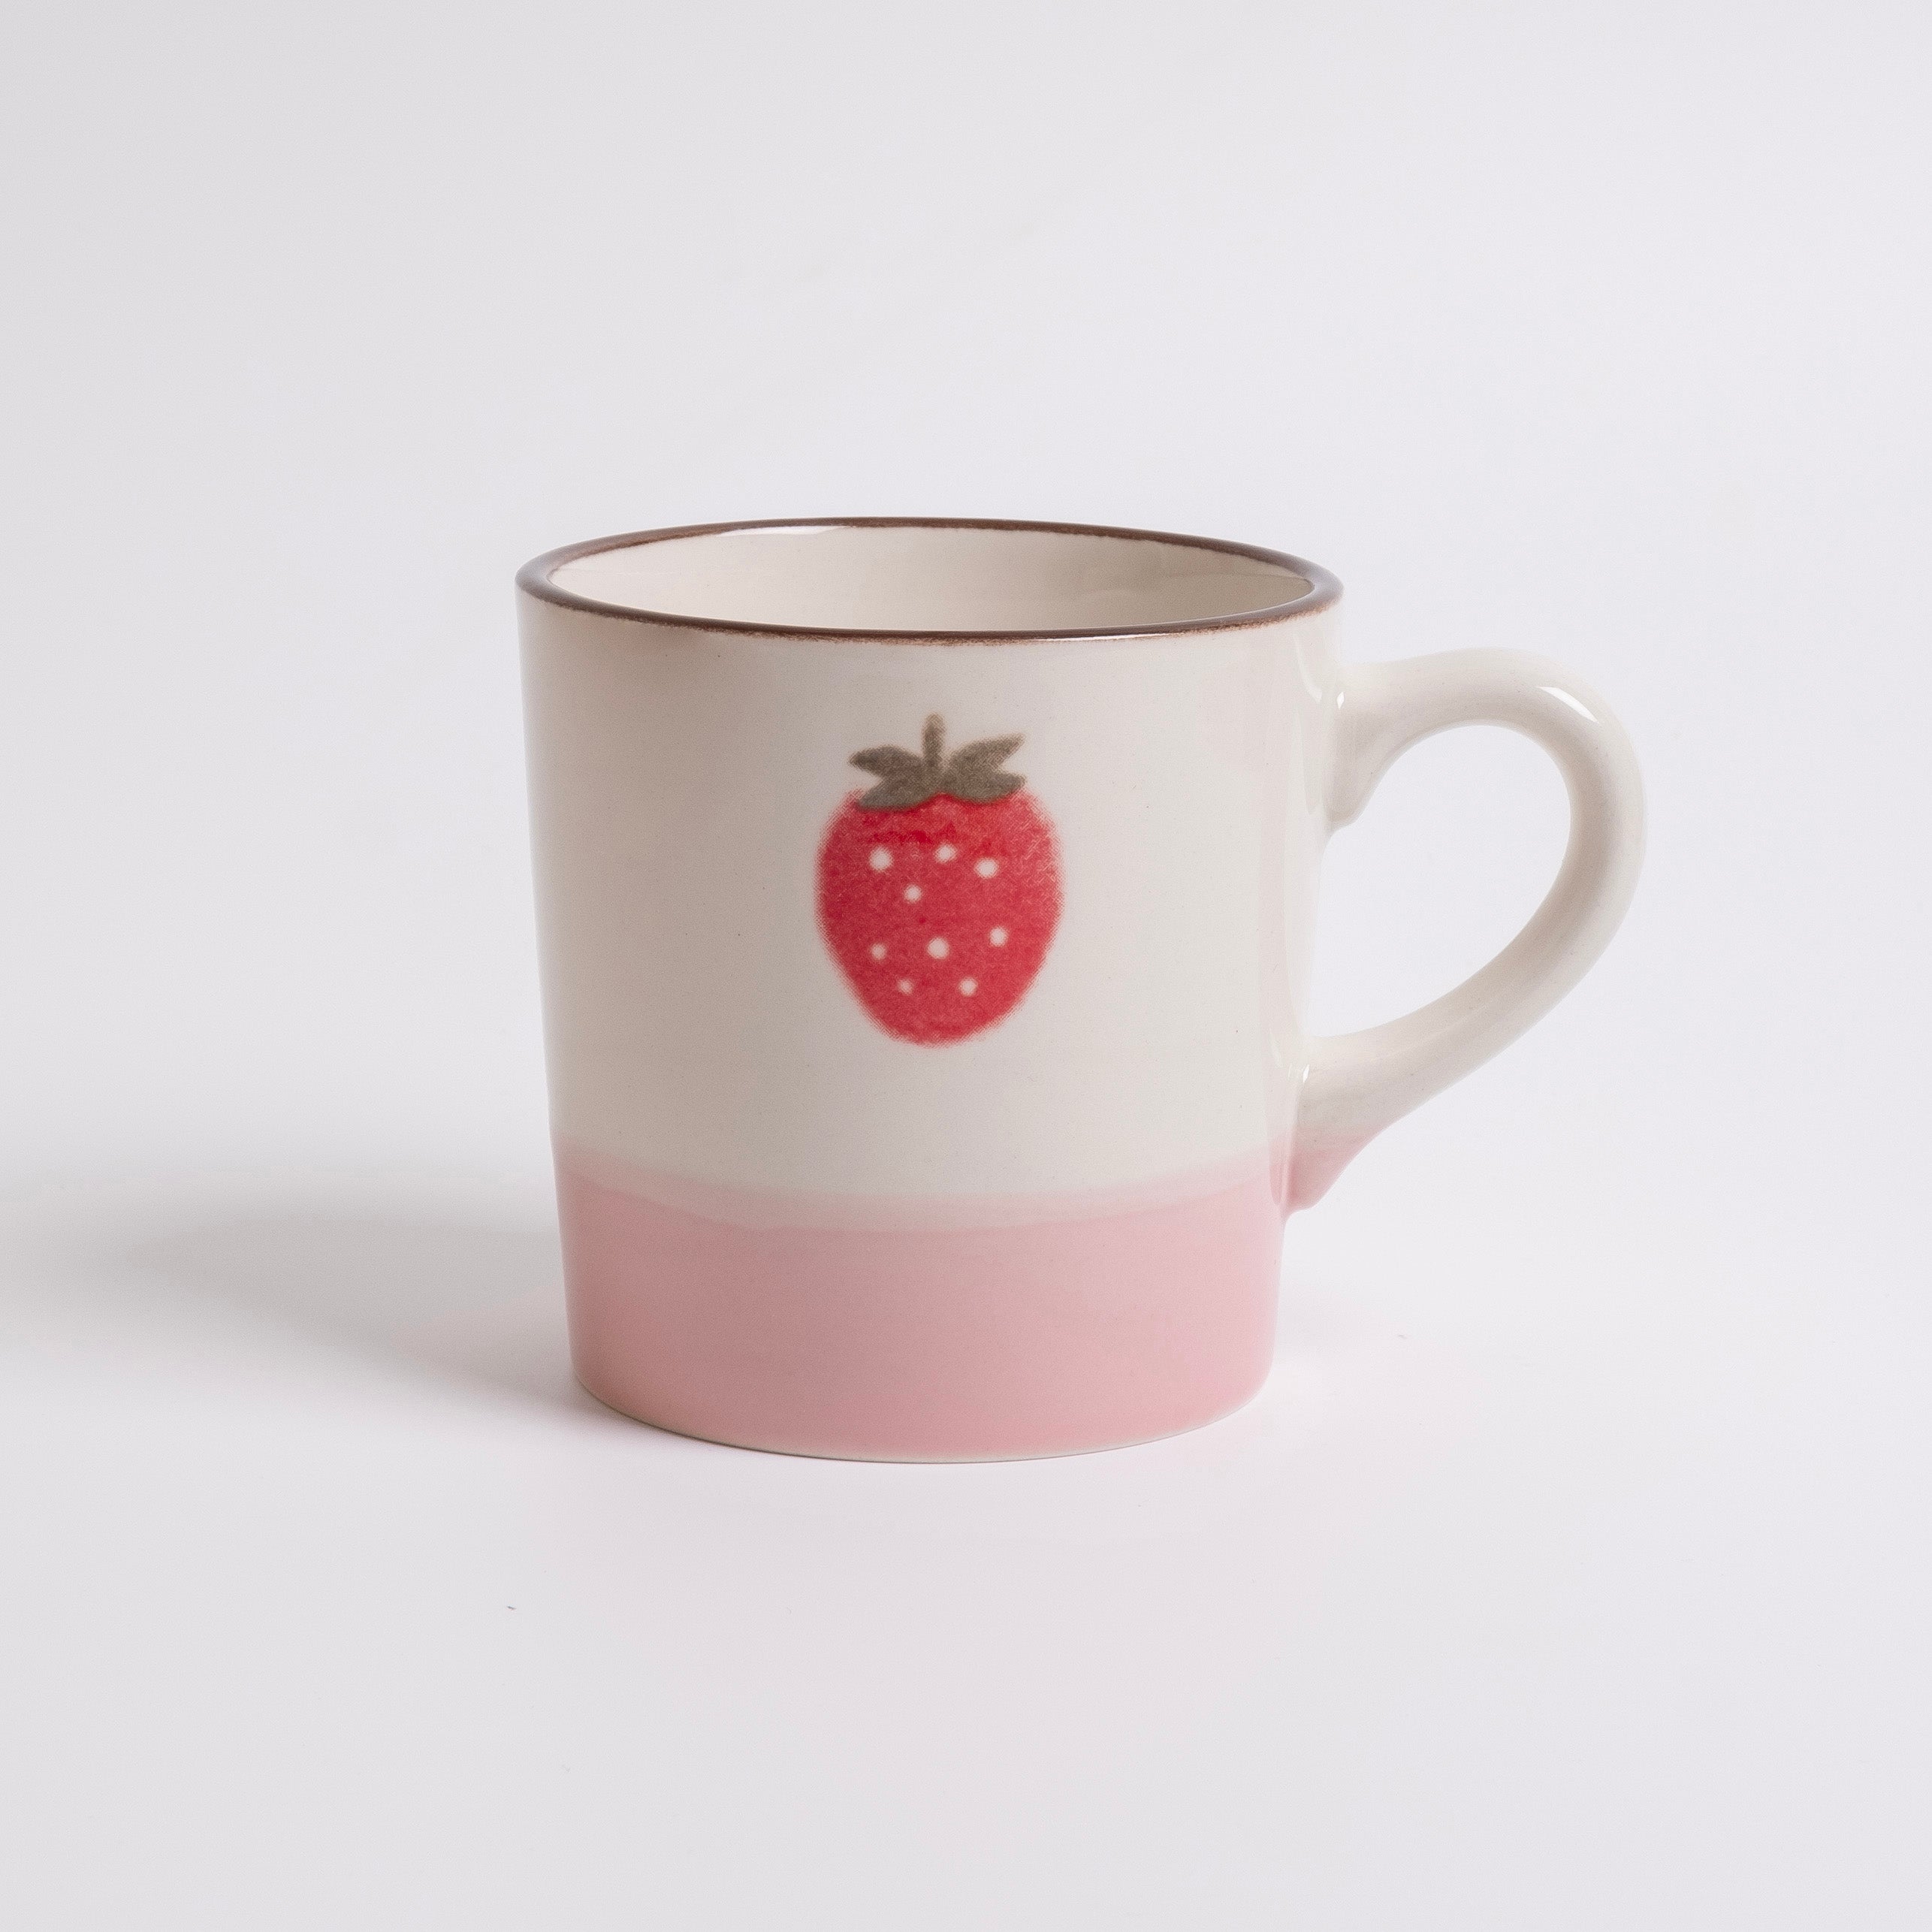 izawa-strawberry-mug-1.jpg